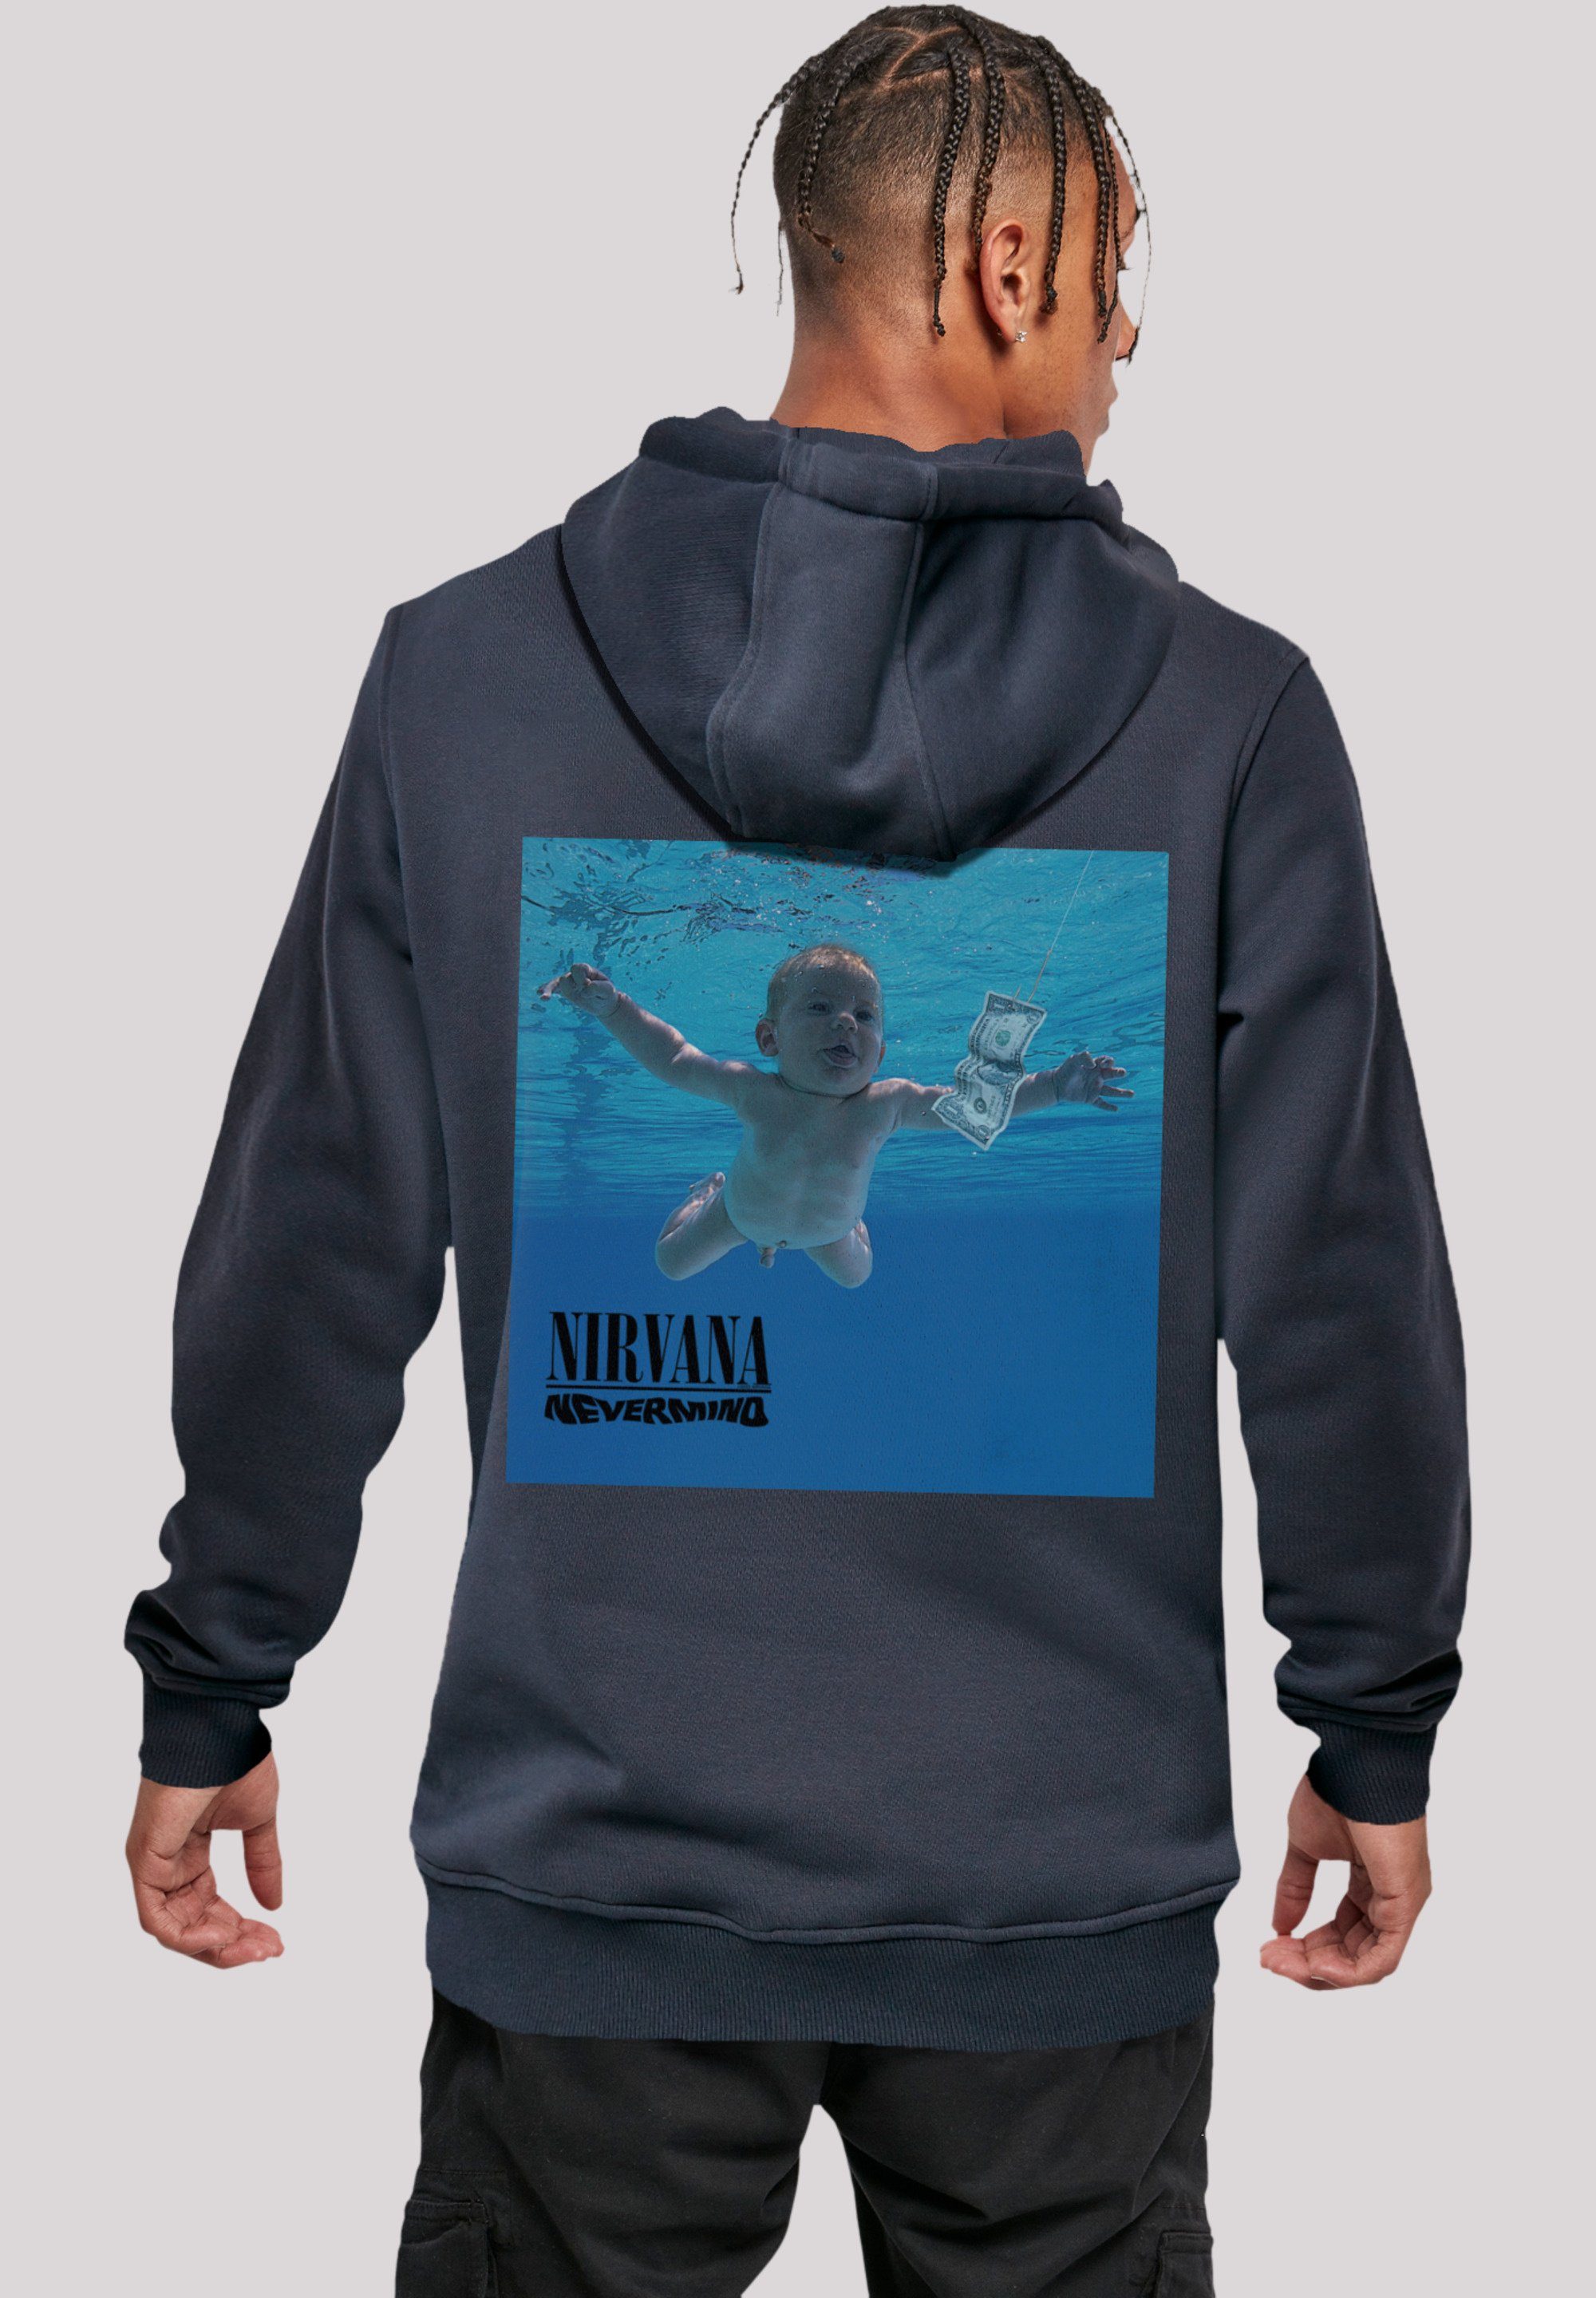 F4NT4STIC Kapuzenpullover Nirvana Rock Band Nevermind Album navy Premium Qualität